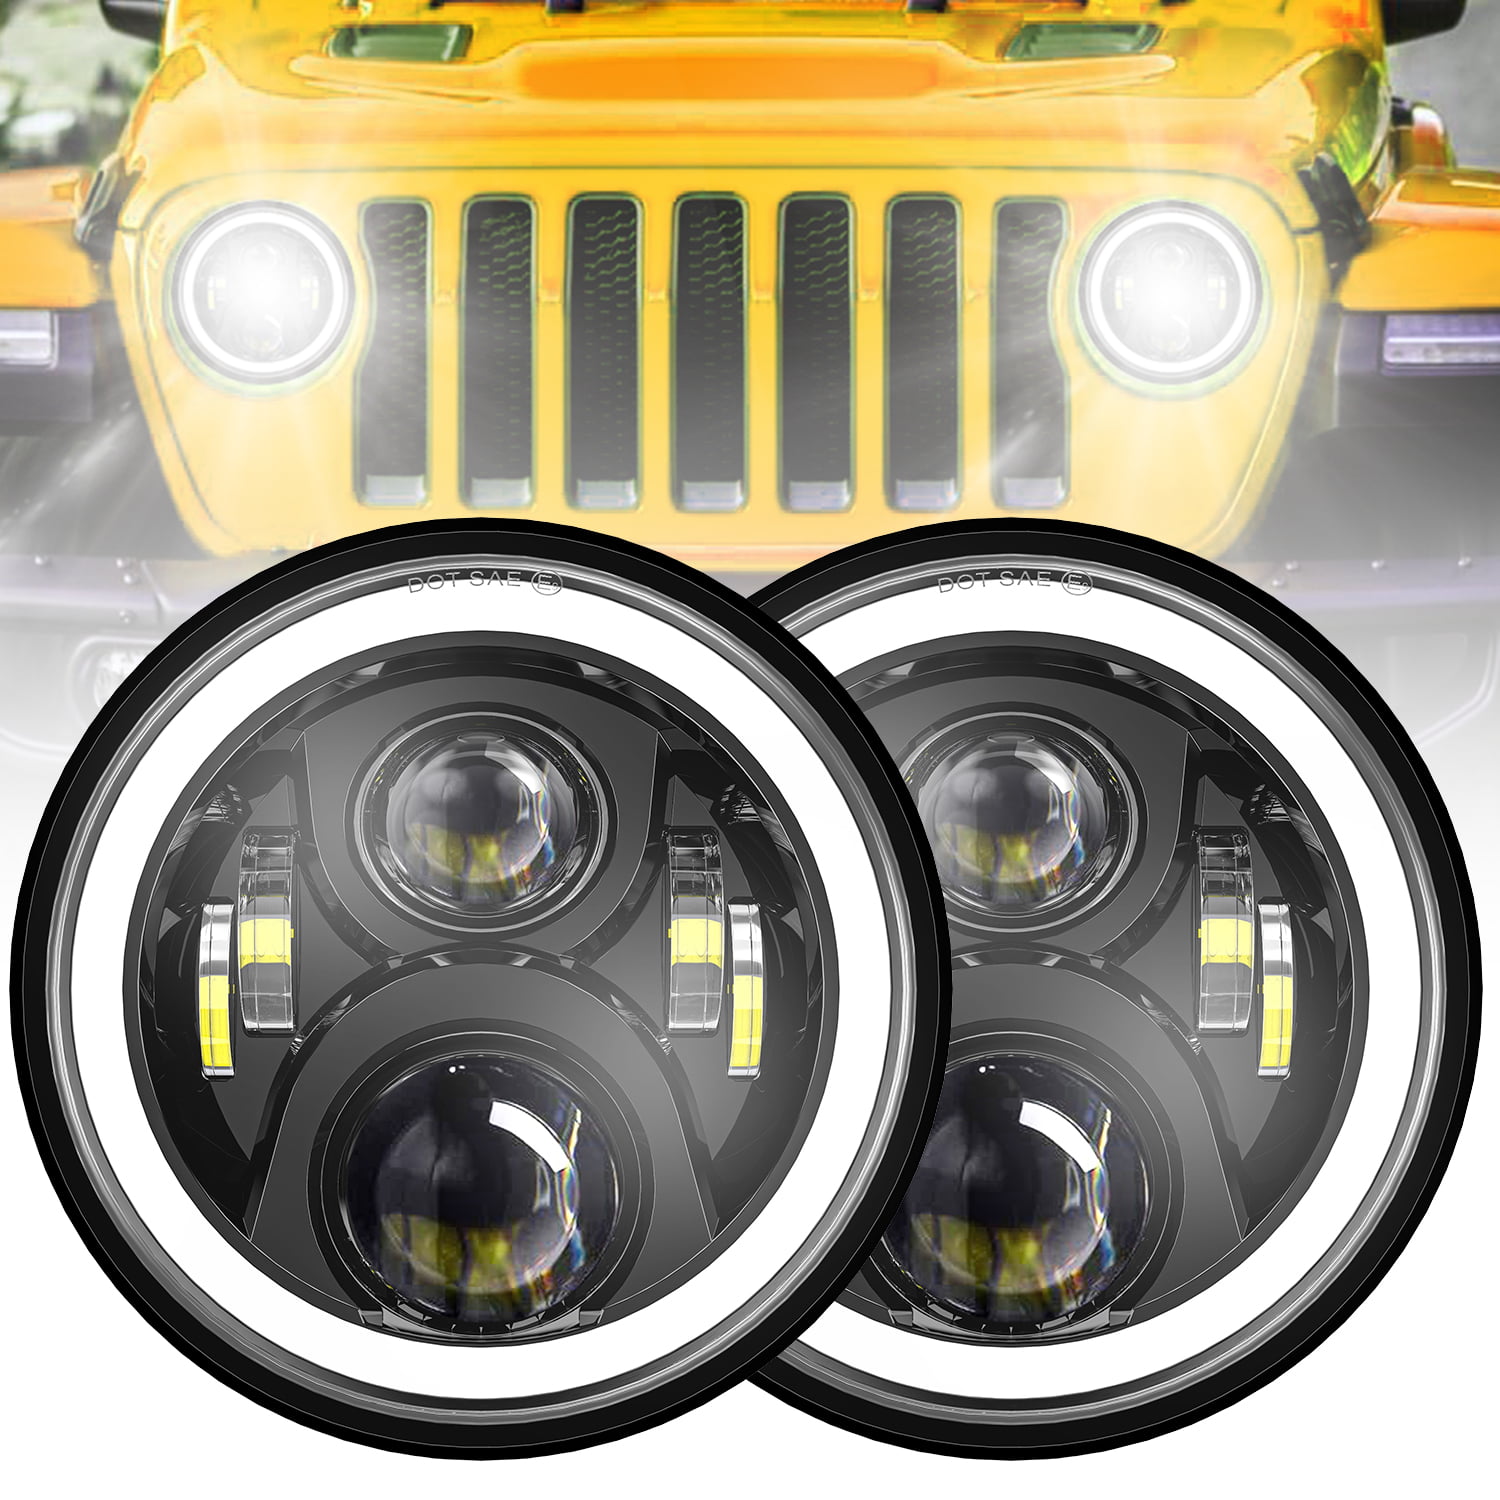 Tnjskce 2Pcs 7 Inch Round LED Headlights for Jeep Wrangler JK TJ LJ CJ  Hummer H1 H2 High Low Beam Headlight w/ DRL White Halo and Amber Turn  Signal Waterproof Car Light